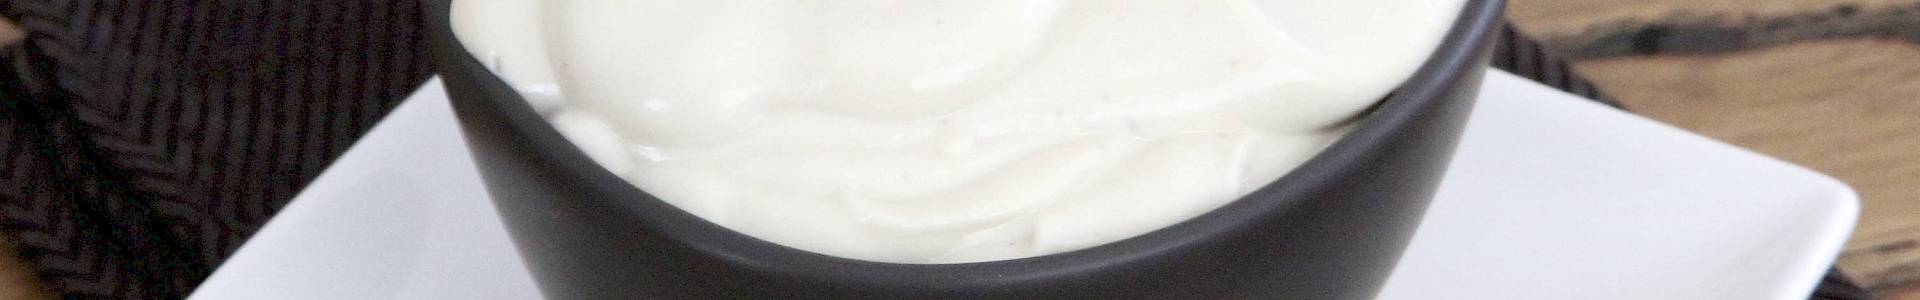 Dairy-Free Sour Cream